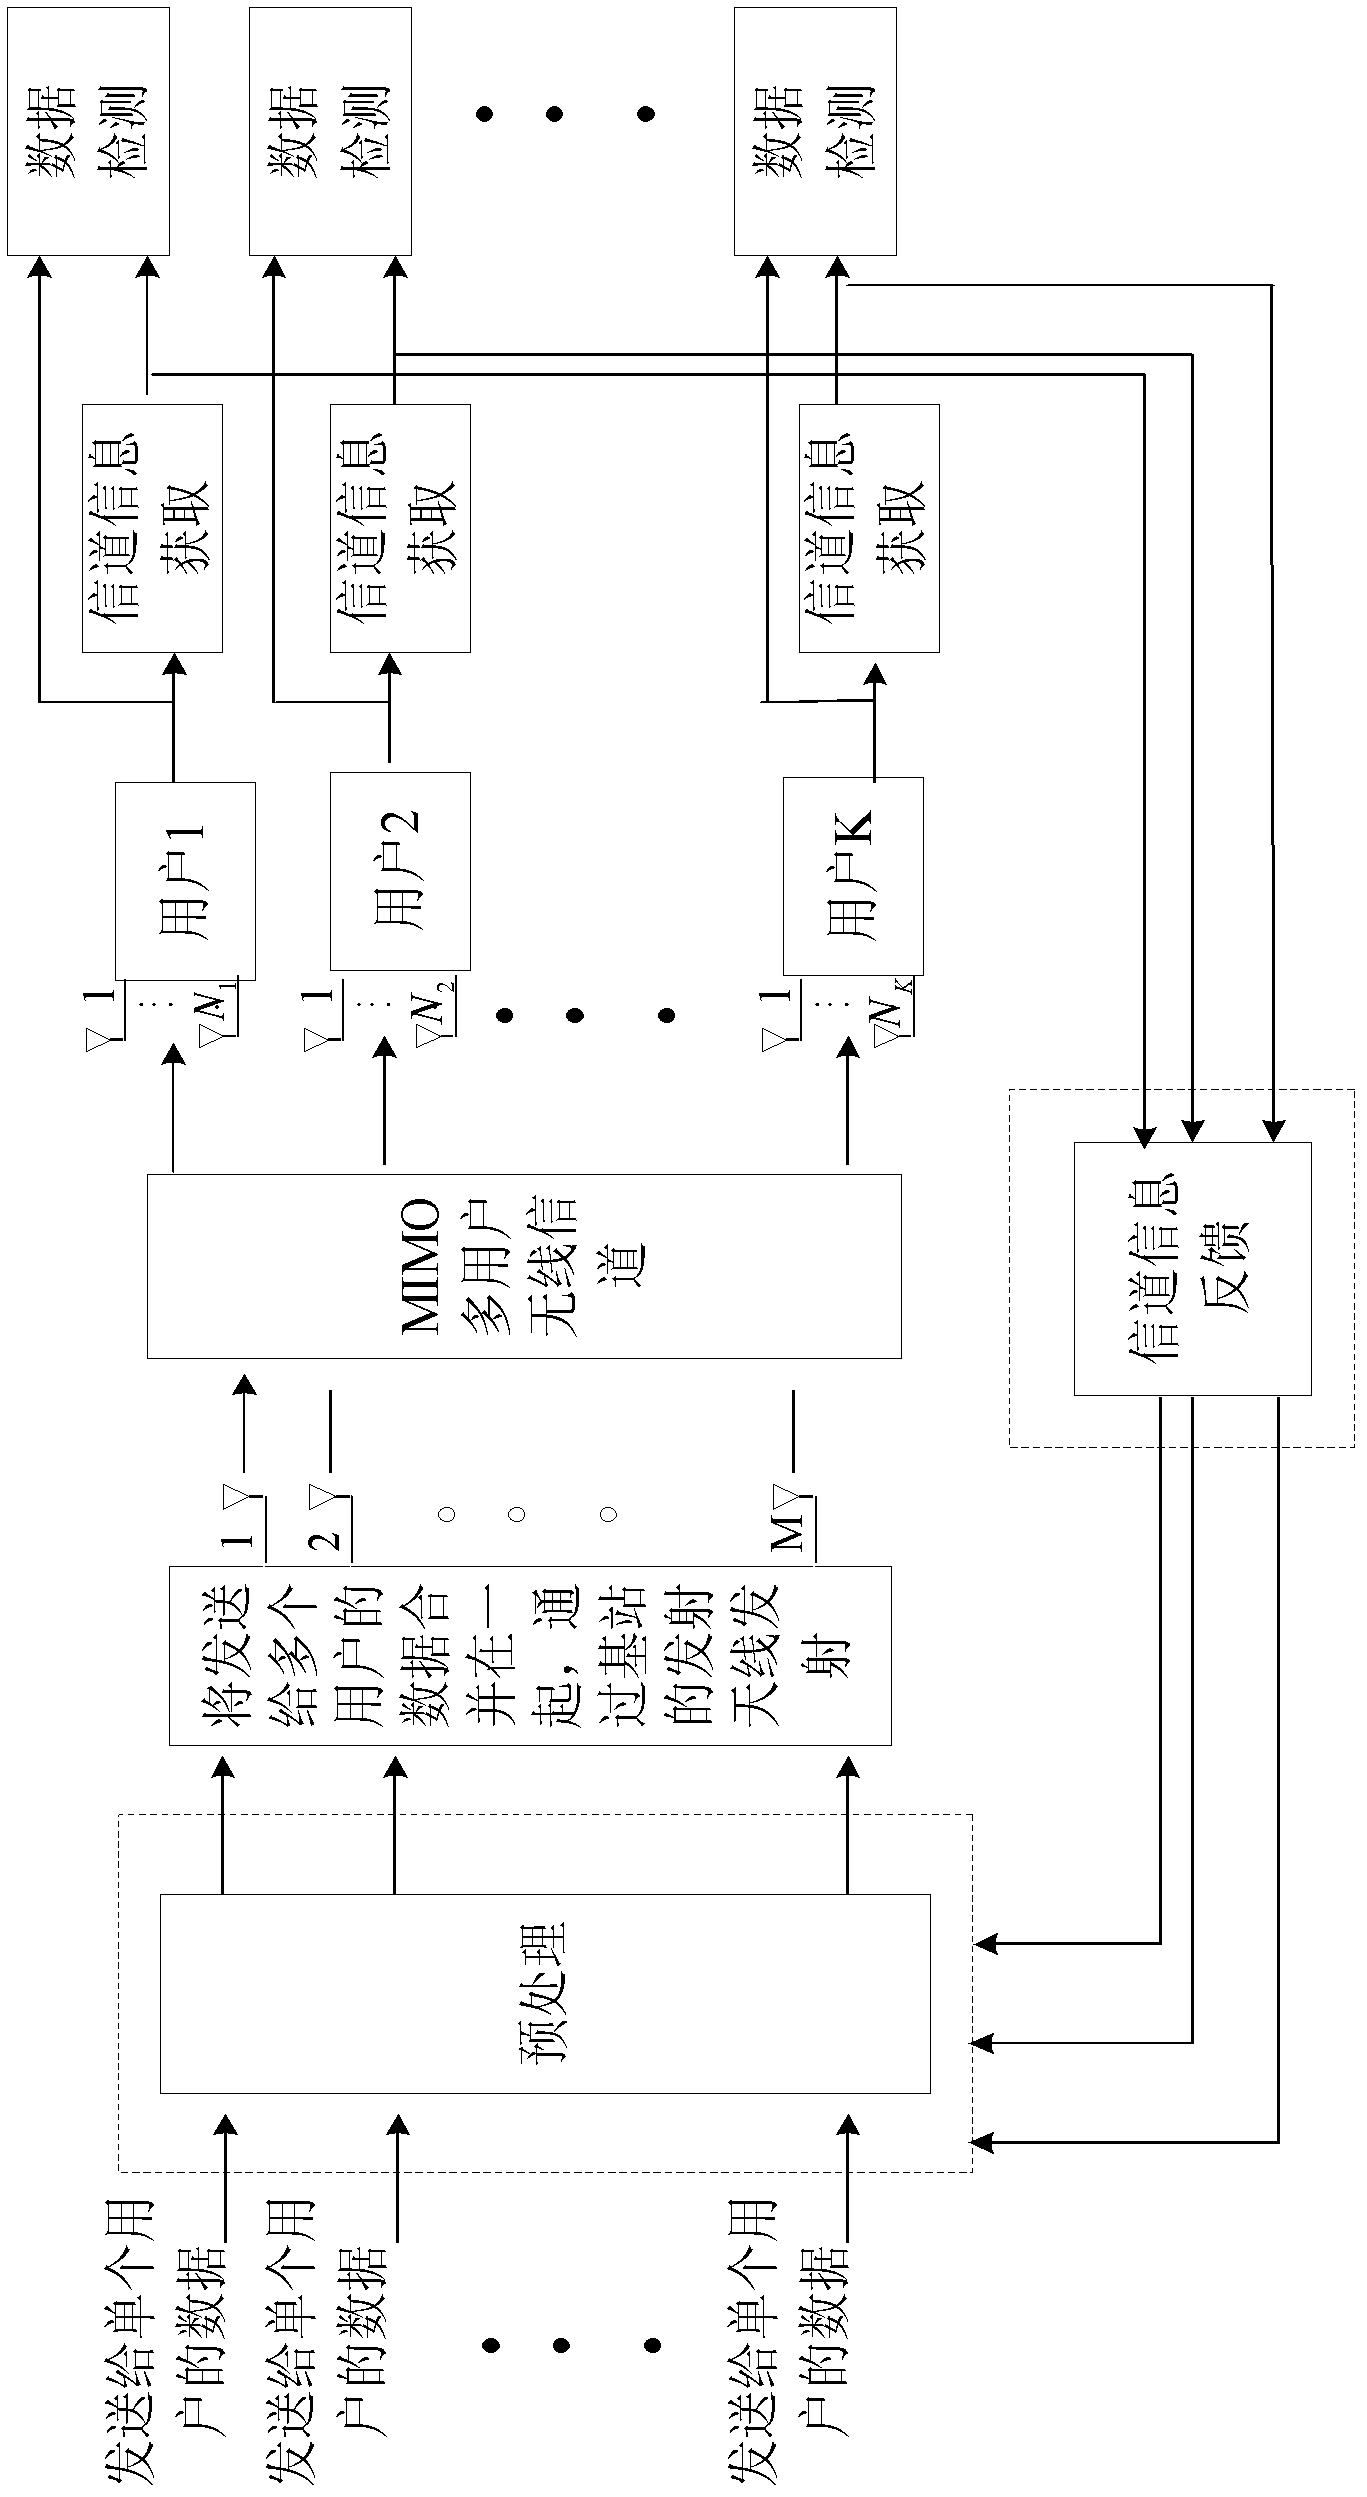 Downlink transmission method for multi-user MIMO (Multiple Input Multiple Output) system based on singular value decomposition